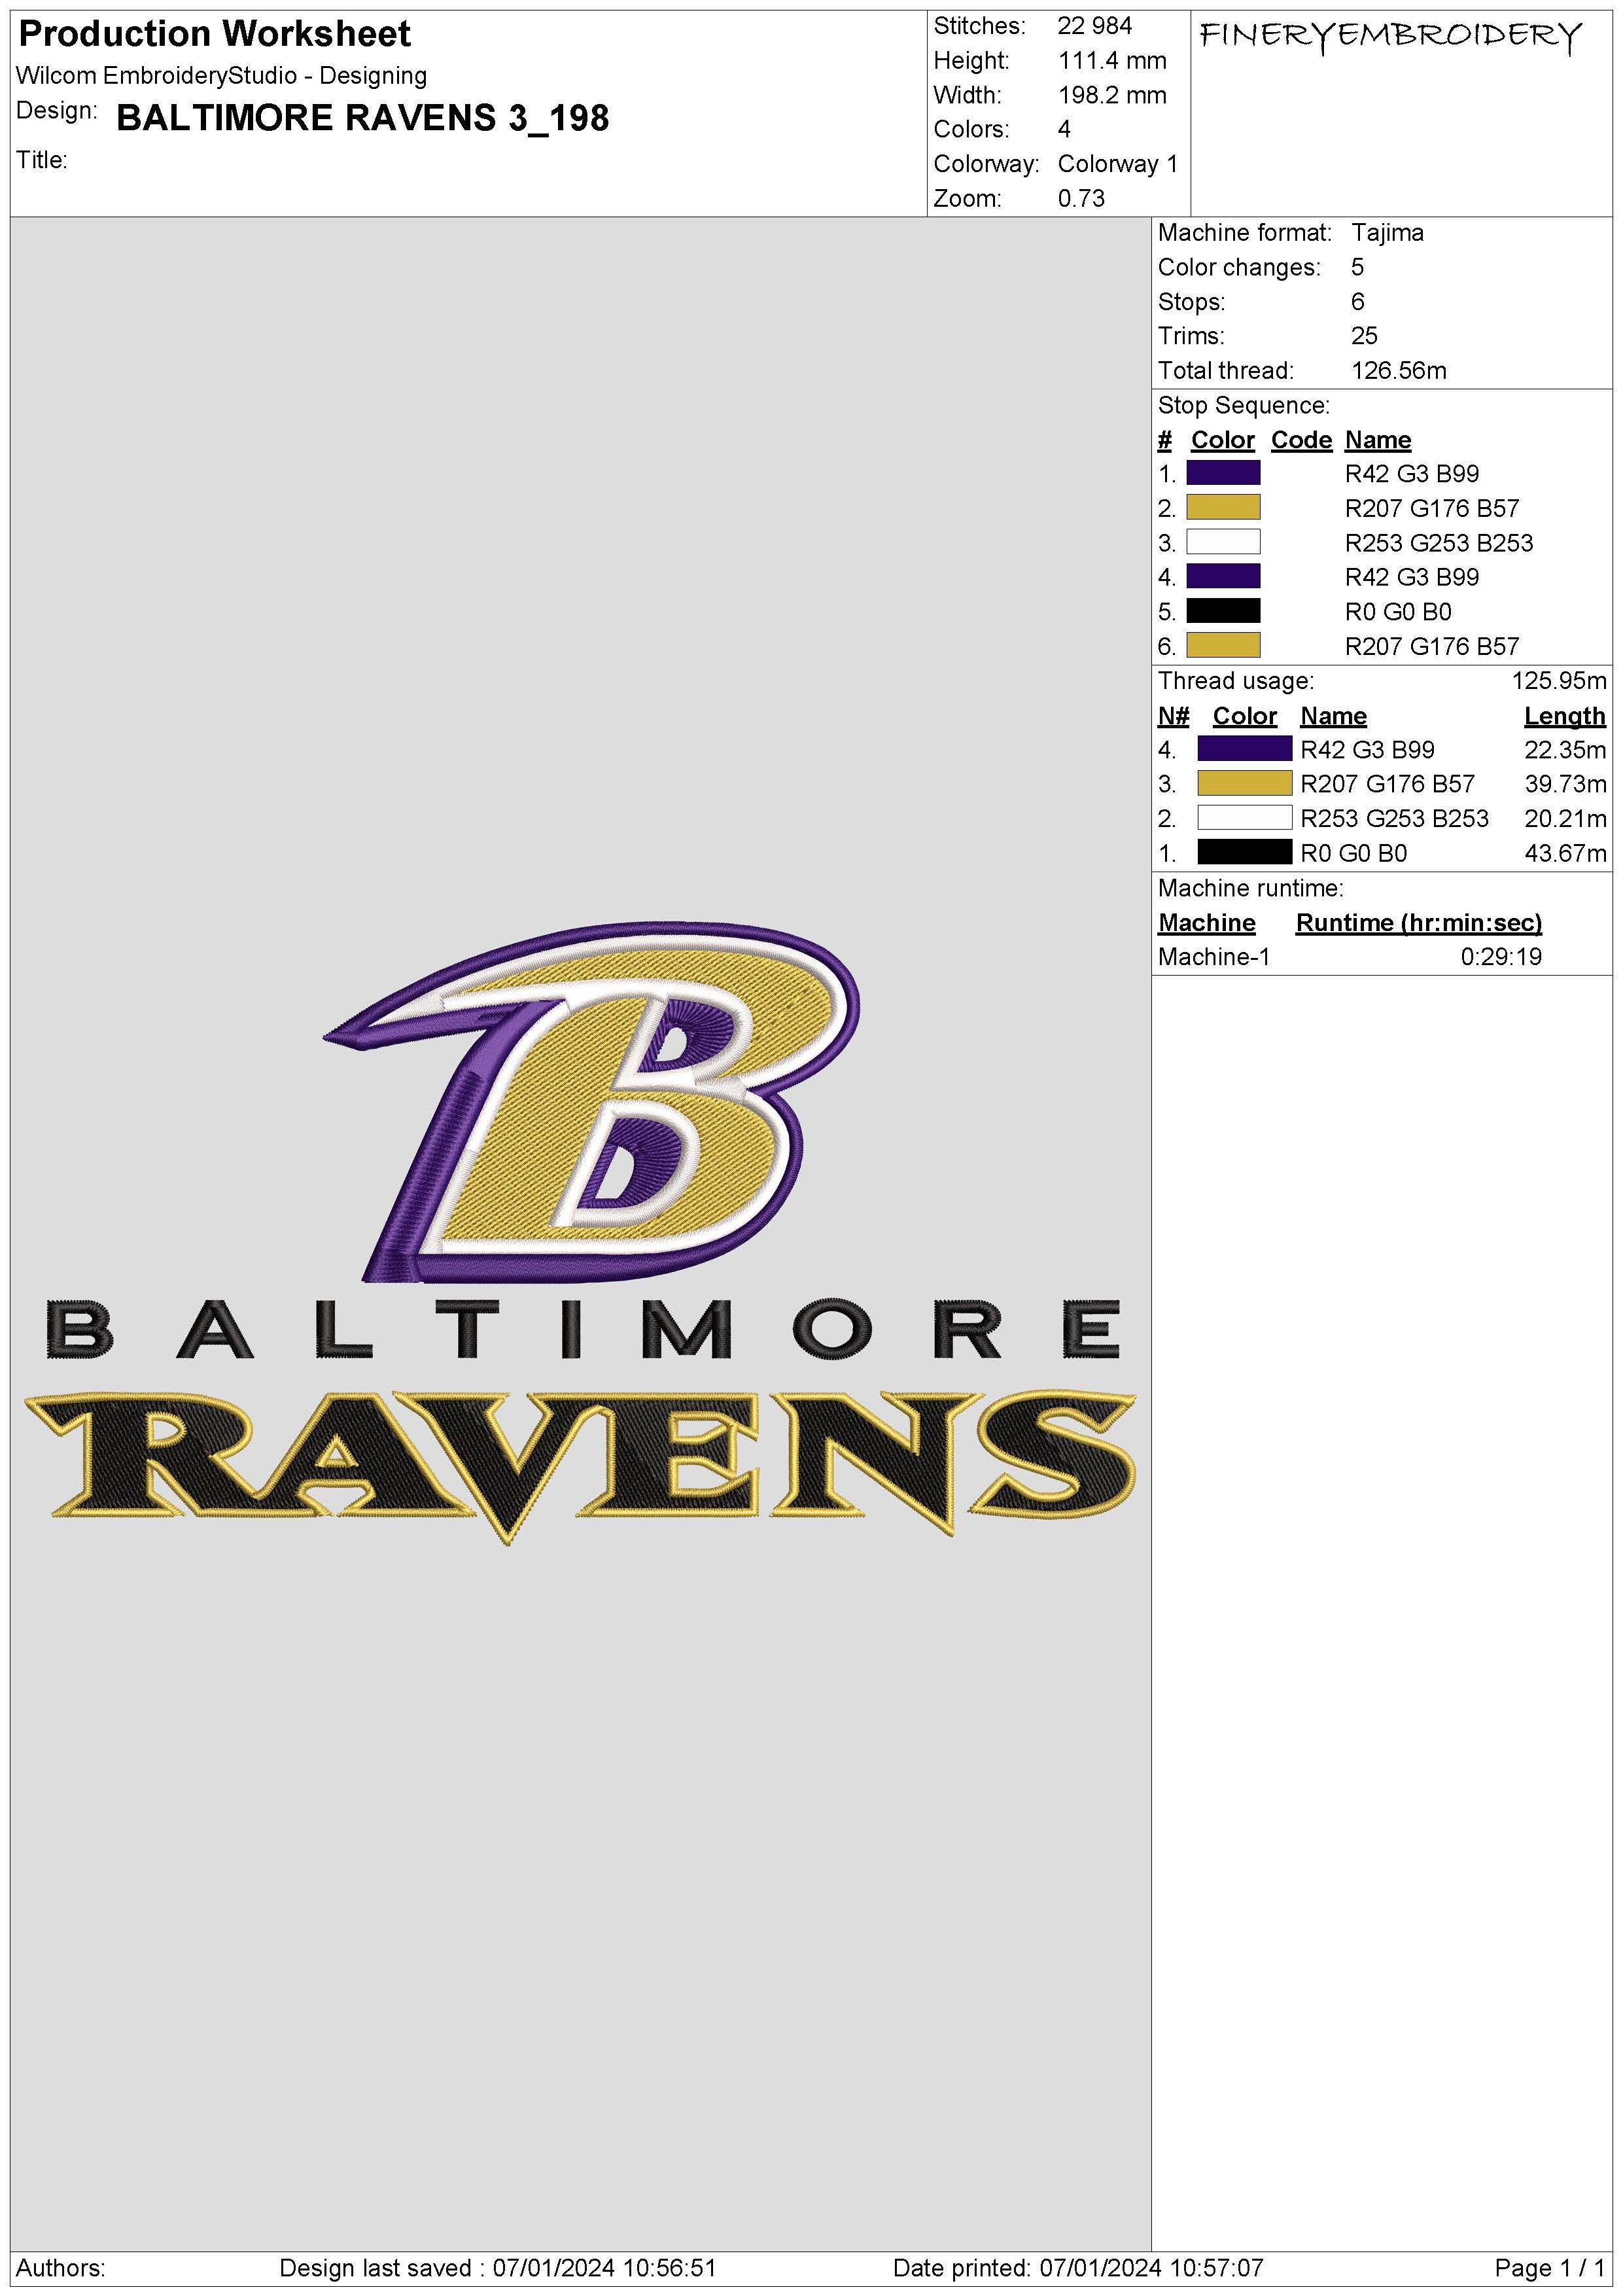 Baltimore Ravens 3 : Embroidery Design